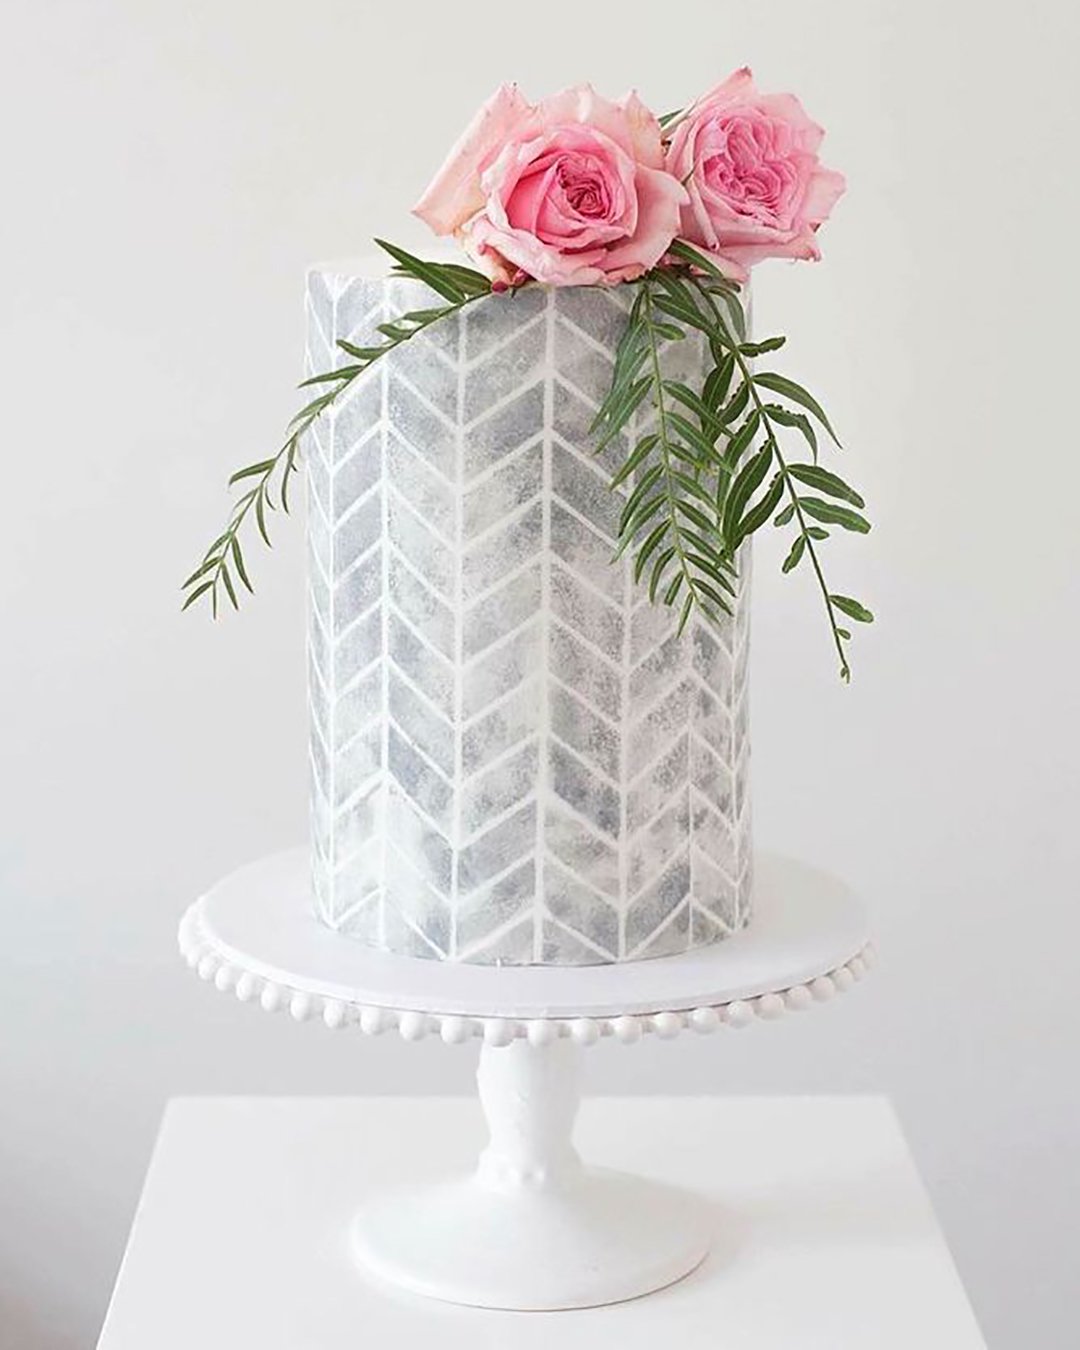 marble wedding cakes sweet bakes